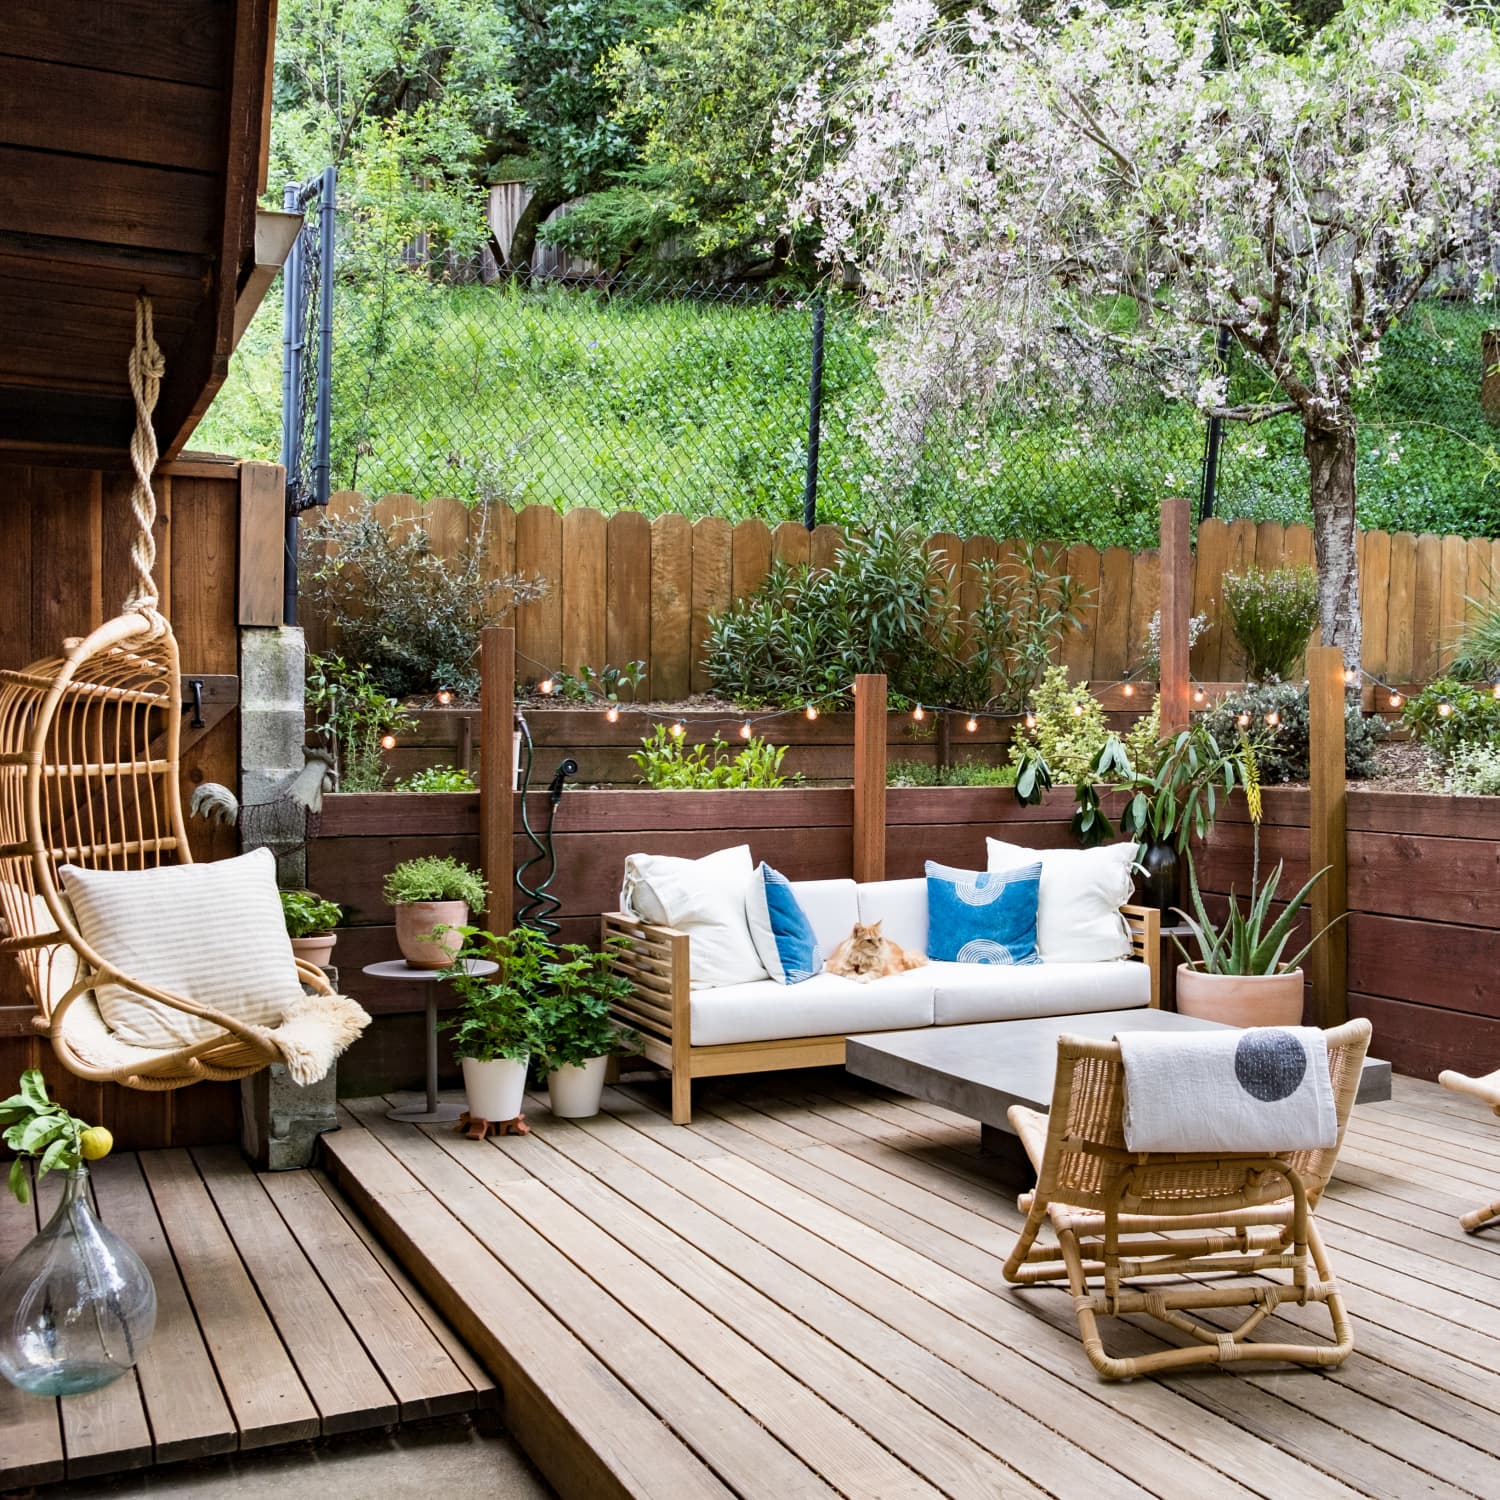 Outdoor Decor: Patio Decor Ideas for a Relaxed Chic Summer